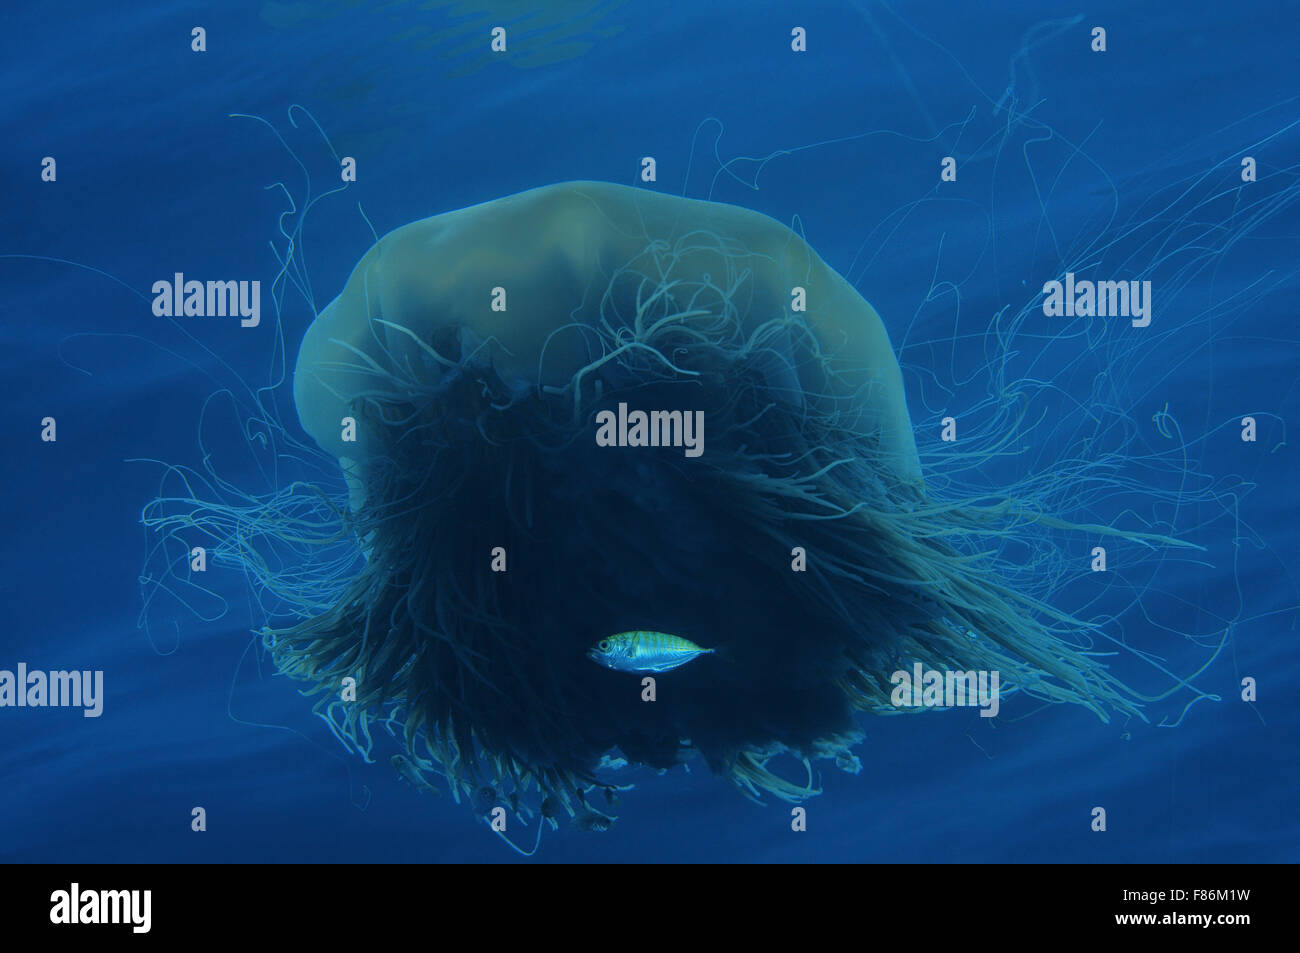 Oct. 15, 2014 - South China Sea, Malaysia - Lion's mane jellyfishÐ± giant jellyfish or the hair jelly (Cyanea capillata, Cyanea arctica) South China Sea, Redang Island, Malaysia, Asia (Credit Image: © Andrey Nekrasov/ZUMA Wire/ZUMAPRESS.com) Stock Photo